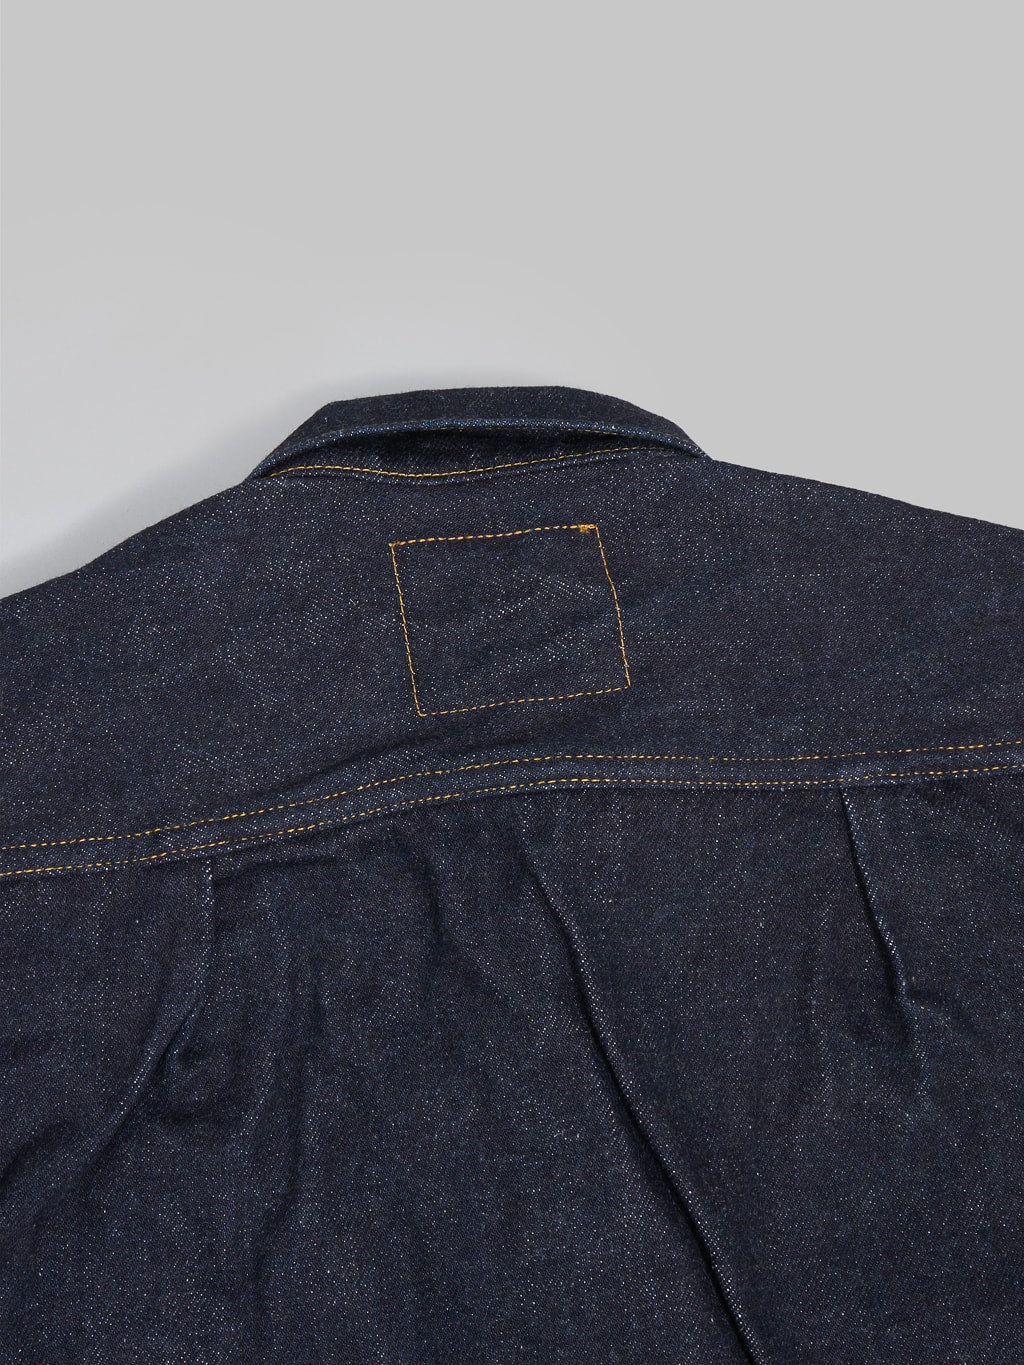 Samurai Jeans S551XX25oz 25th Limited Edition Type I Denim Jacket stitching